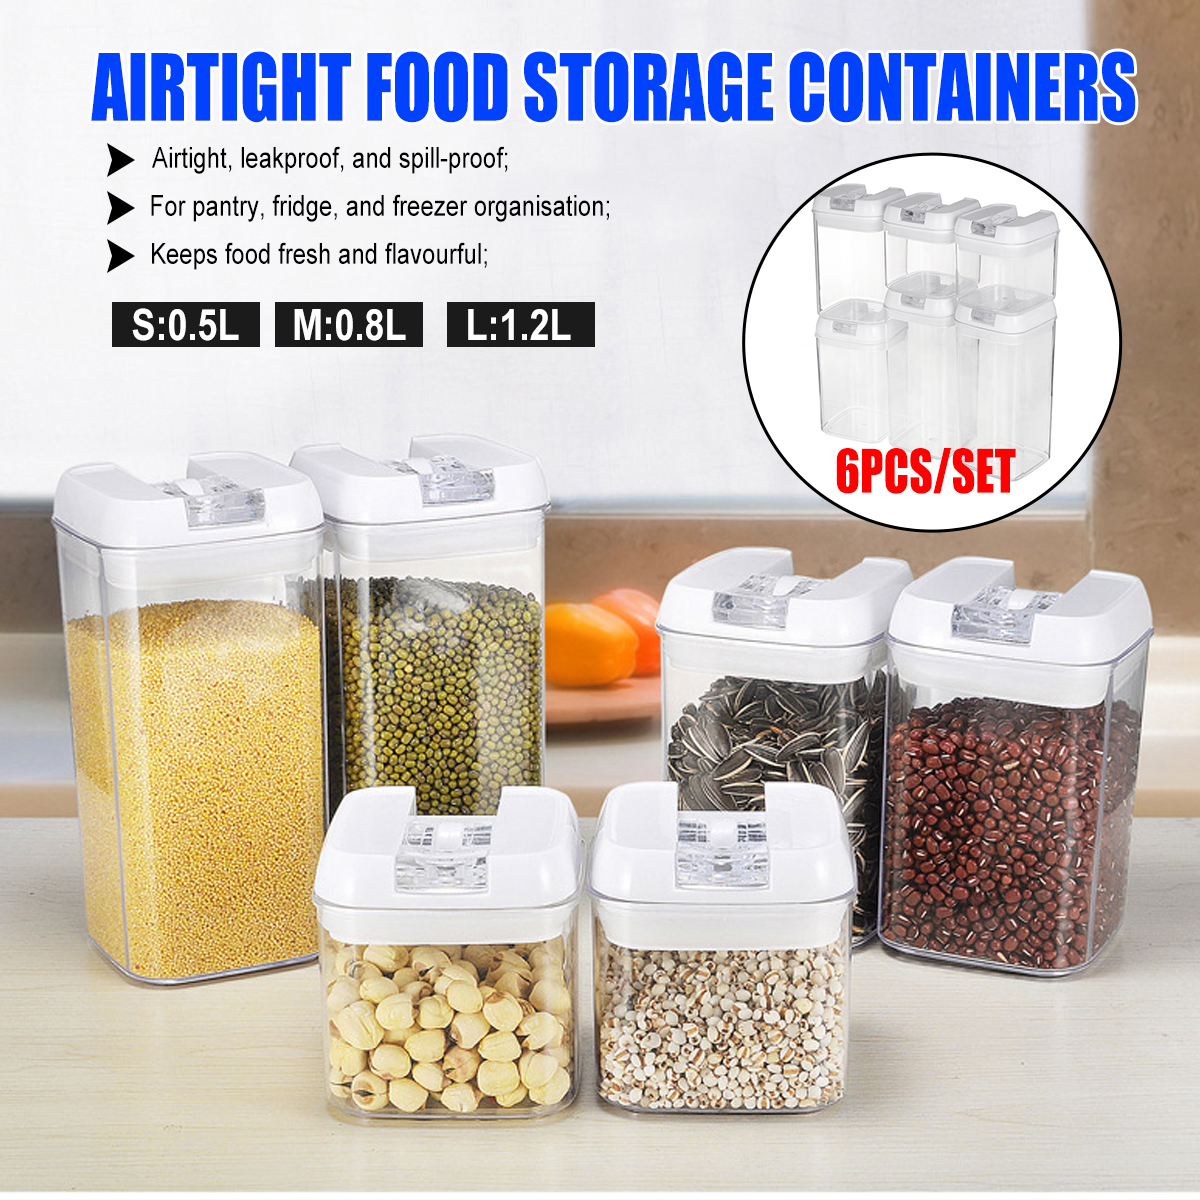 6pcs-Airtight-Refrigerator-Food-Container-Storage-with-Lock-Lids-Plastic-Transparent-Multigrain-Cont-1752734-2